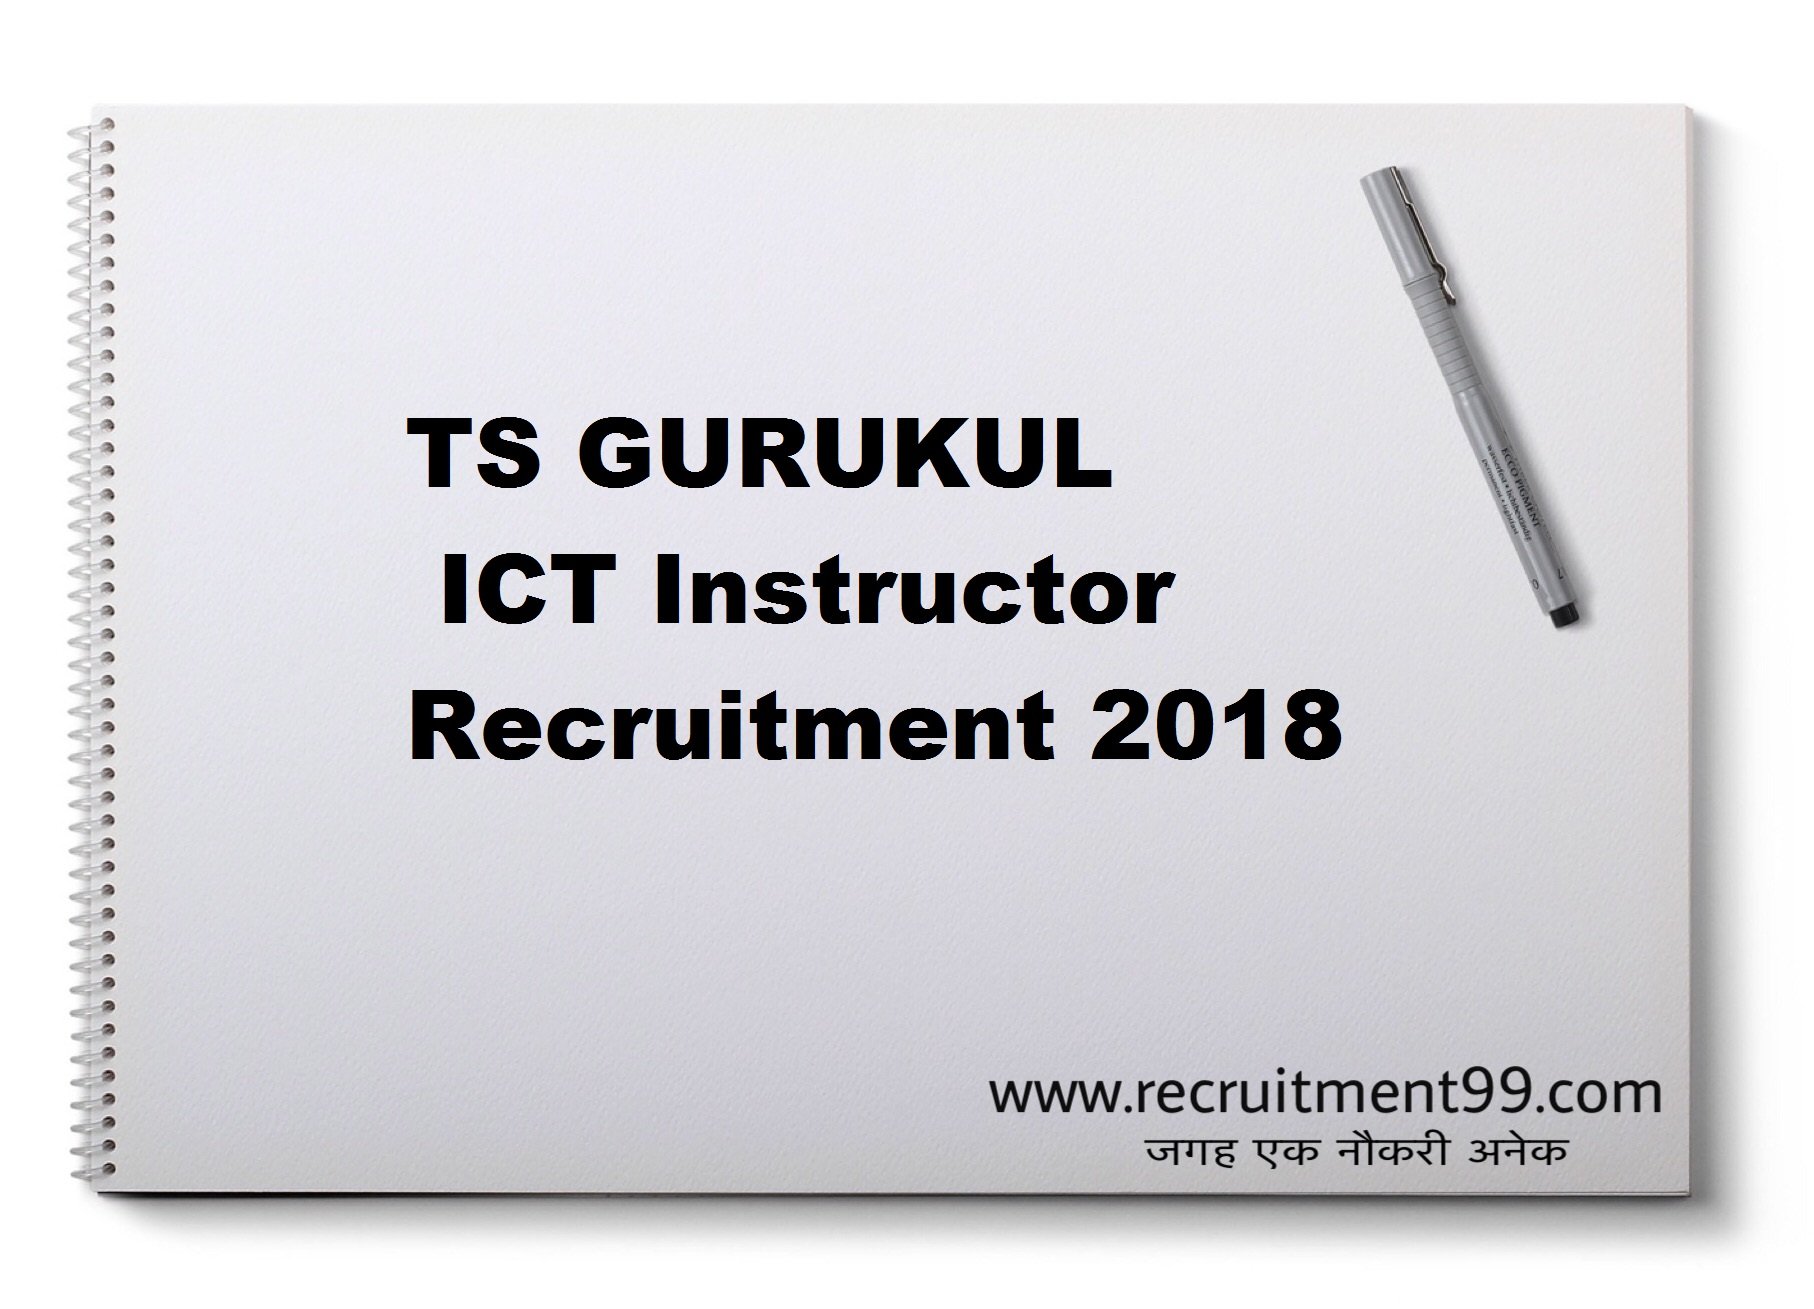 TS GURUKUL ICT Instructor Recruitment Hall Ticket Result 2018